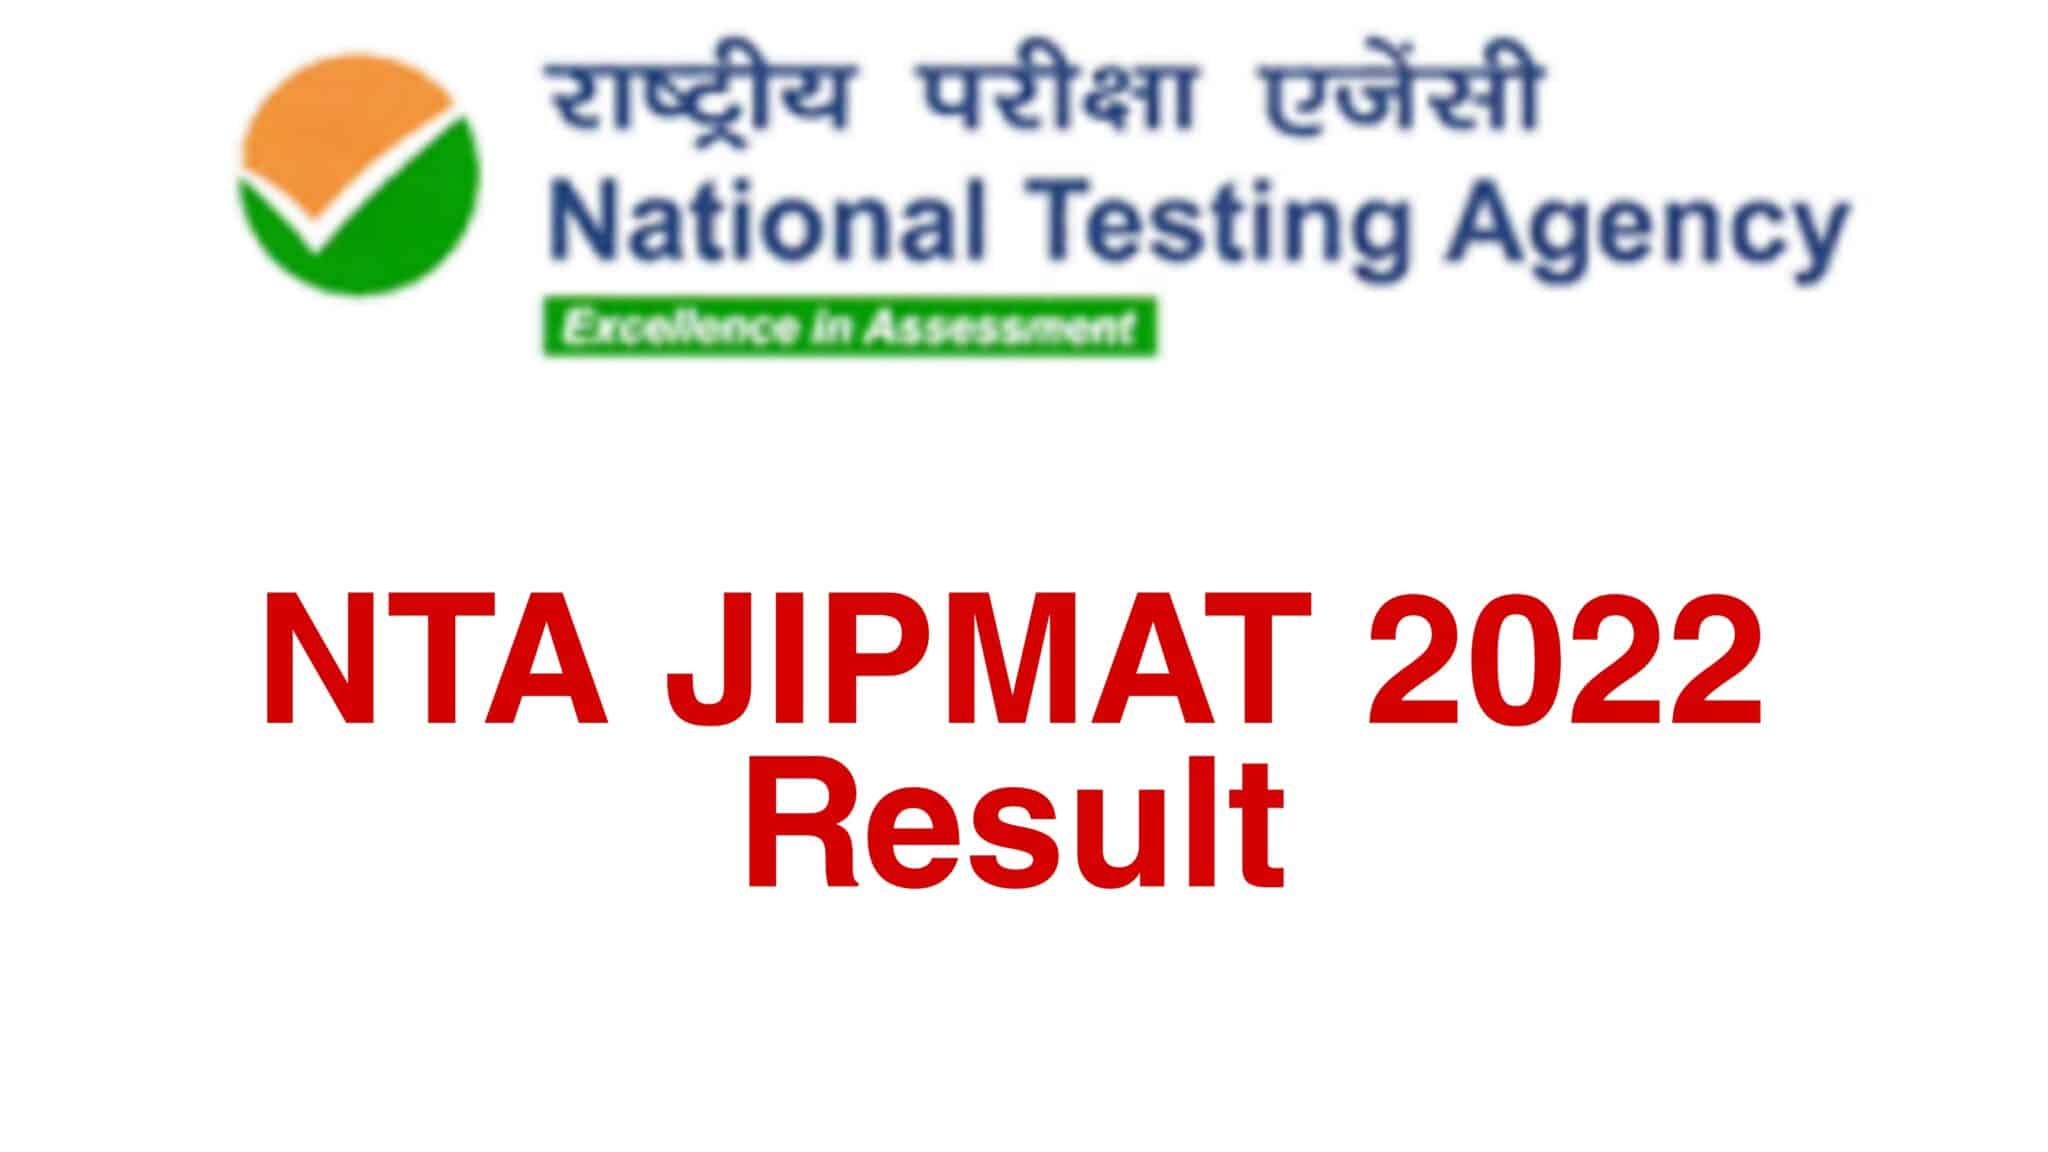 NTA JIPMAT 2022 Result